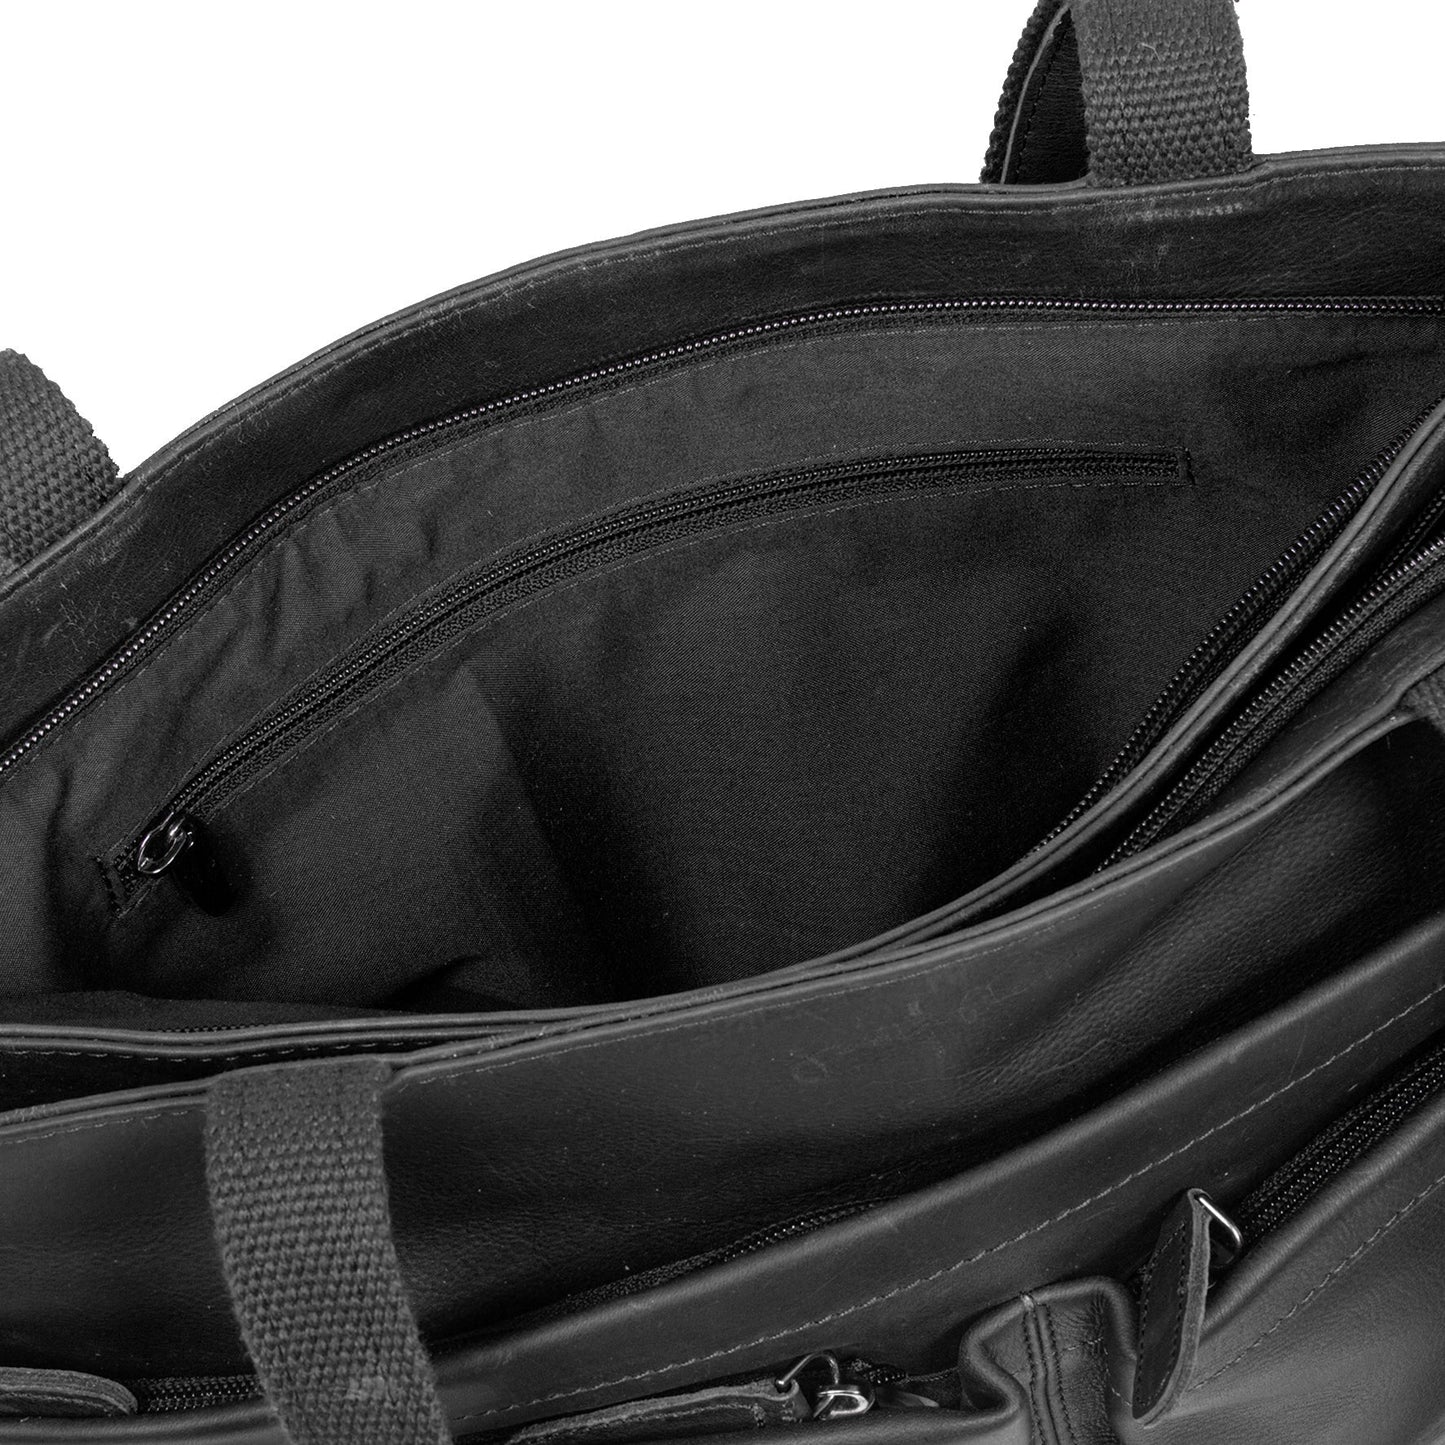 Fay shopper black 34x11x27cm - Laure Bags and Travel